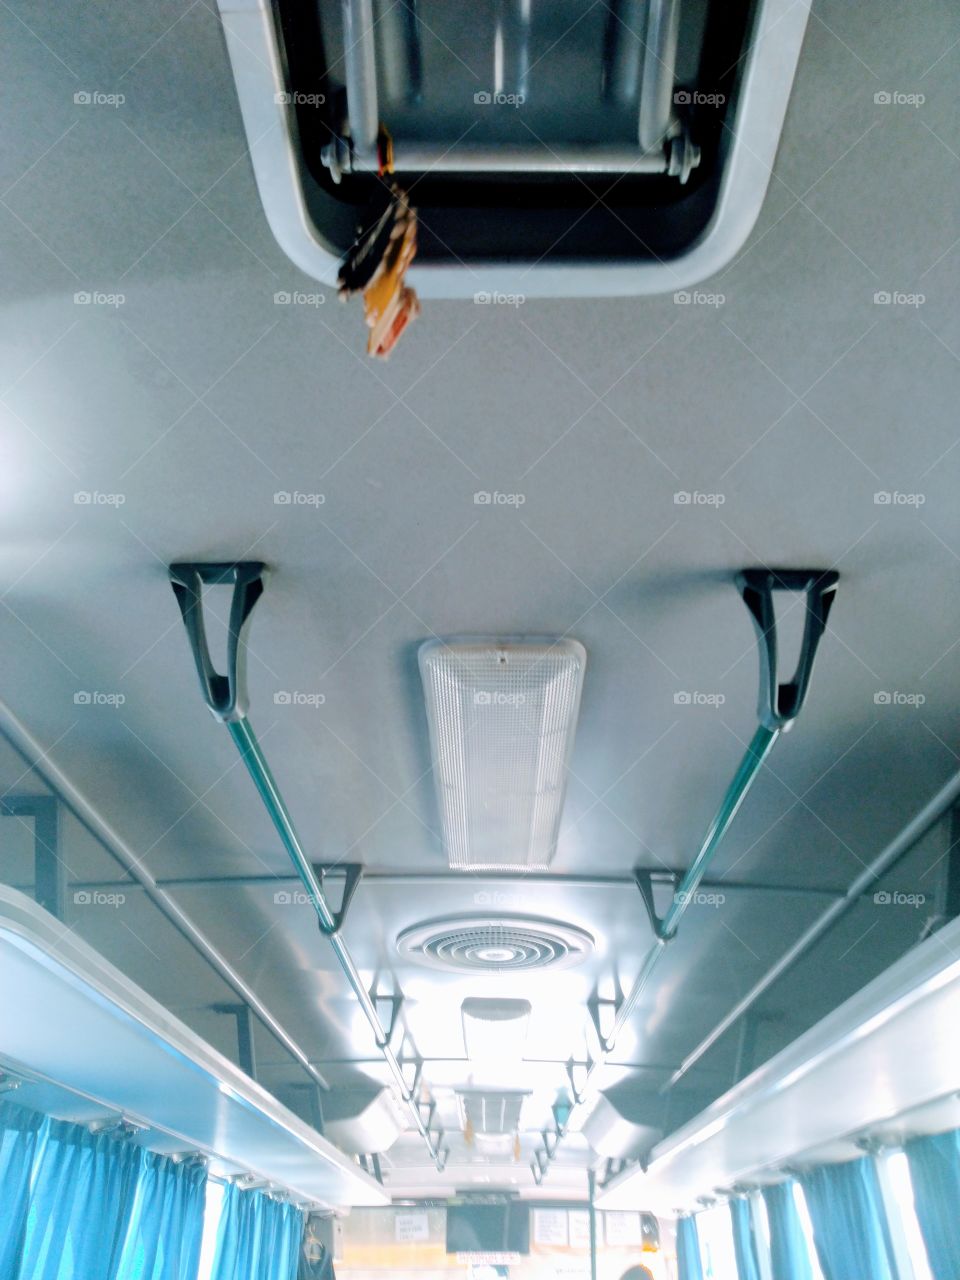 ceiling of bus